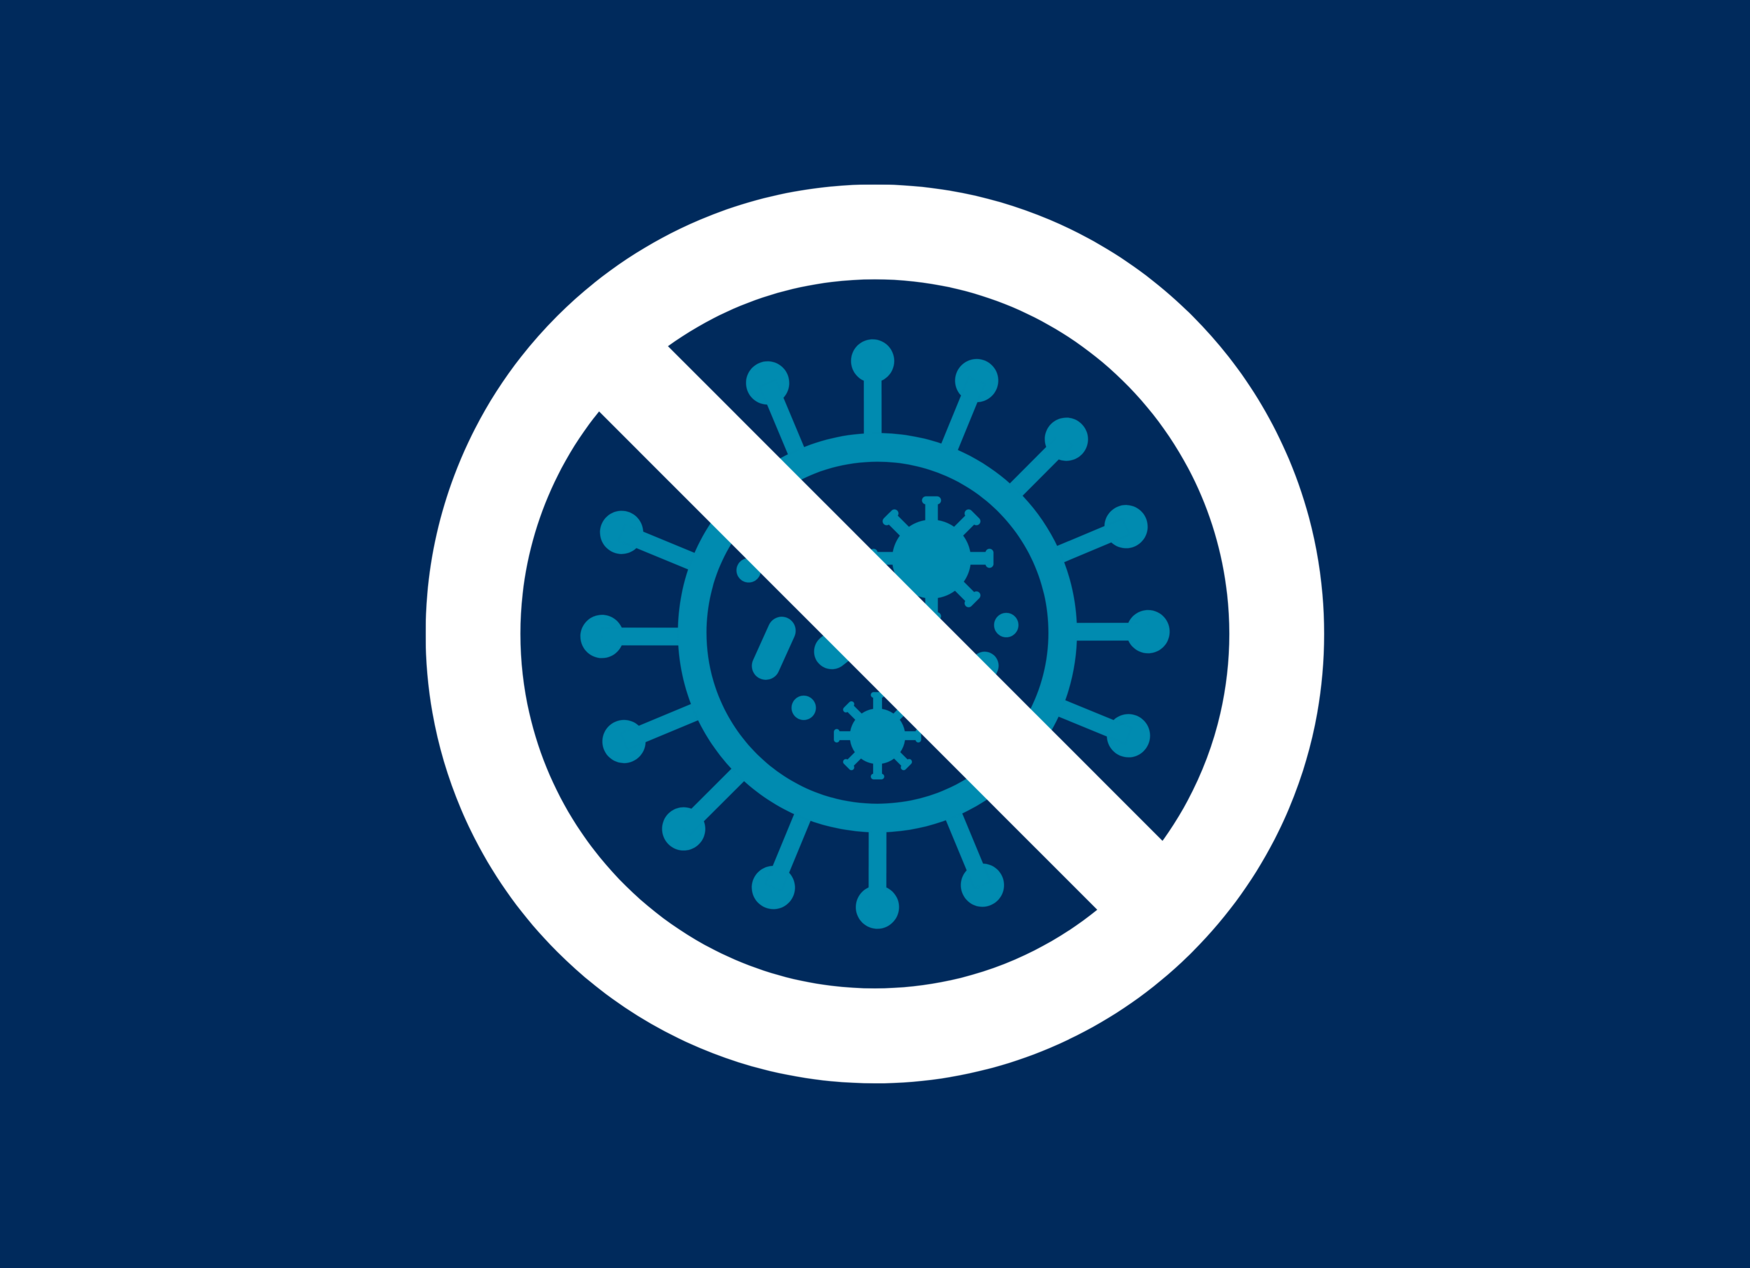 A prohibition symbol over a virus